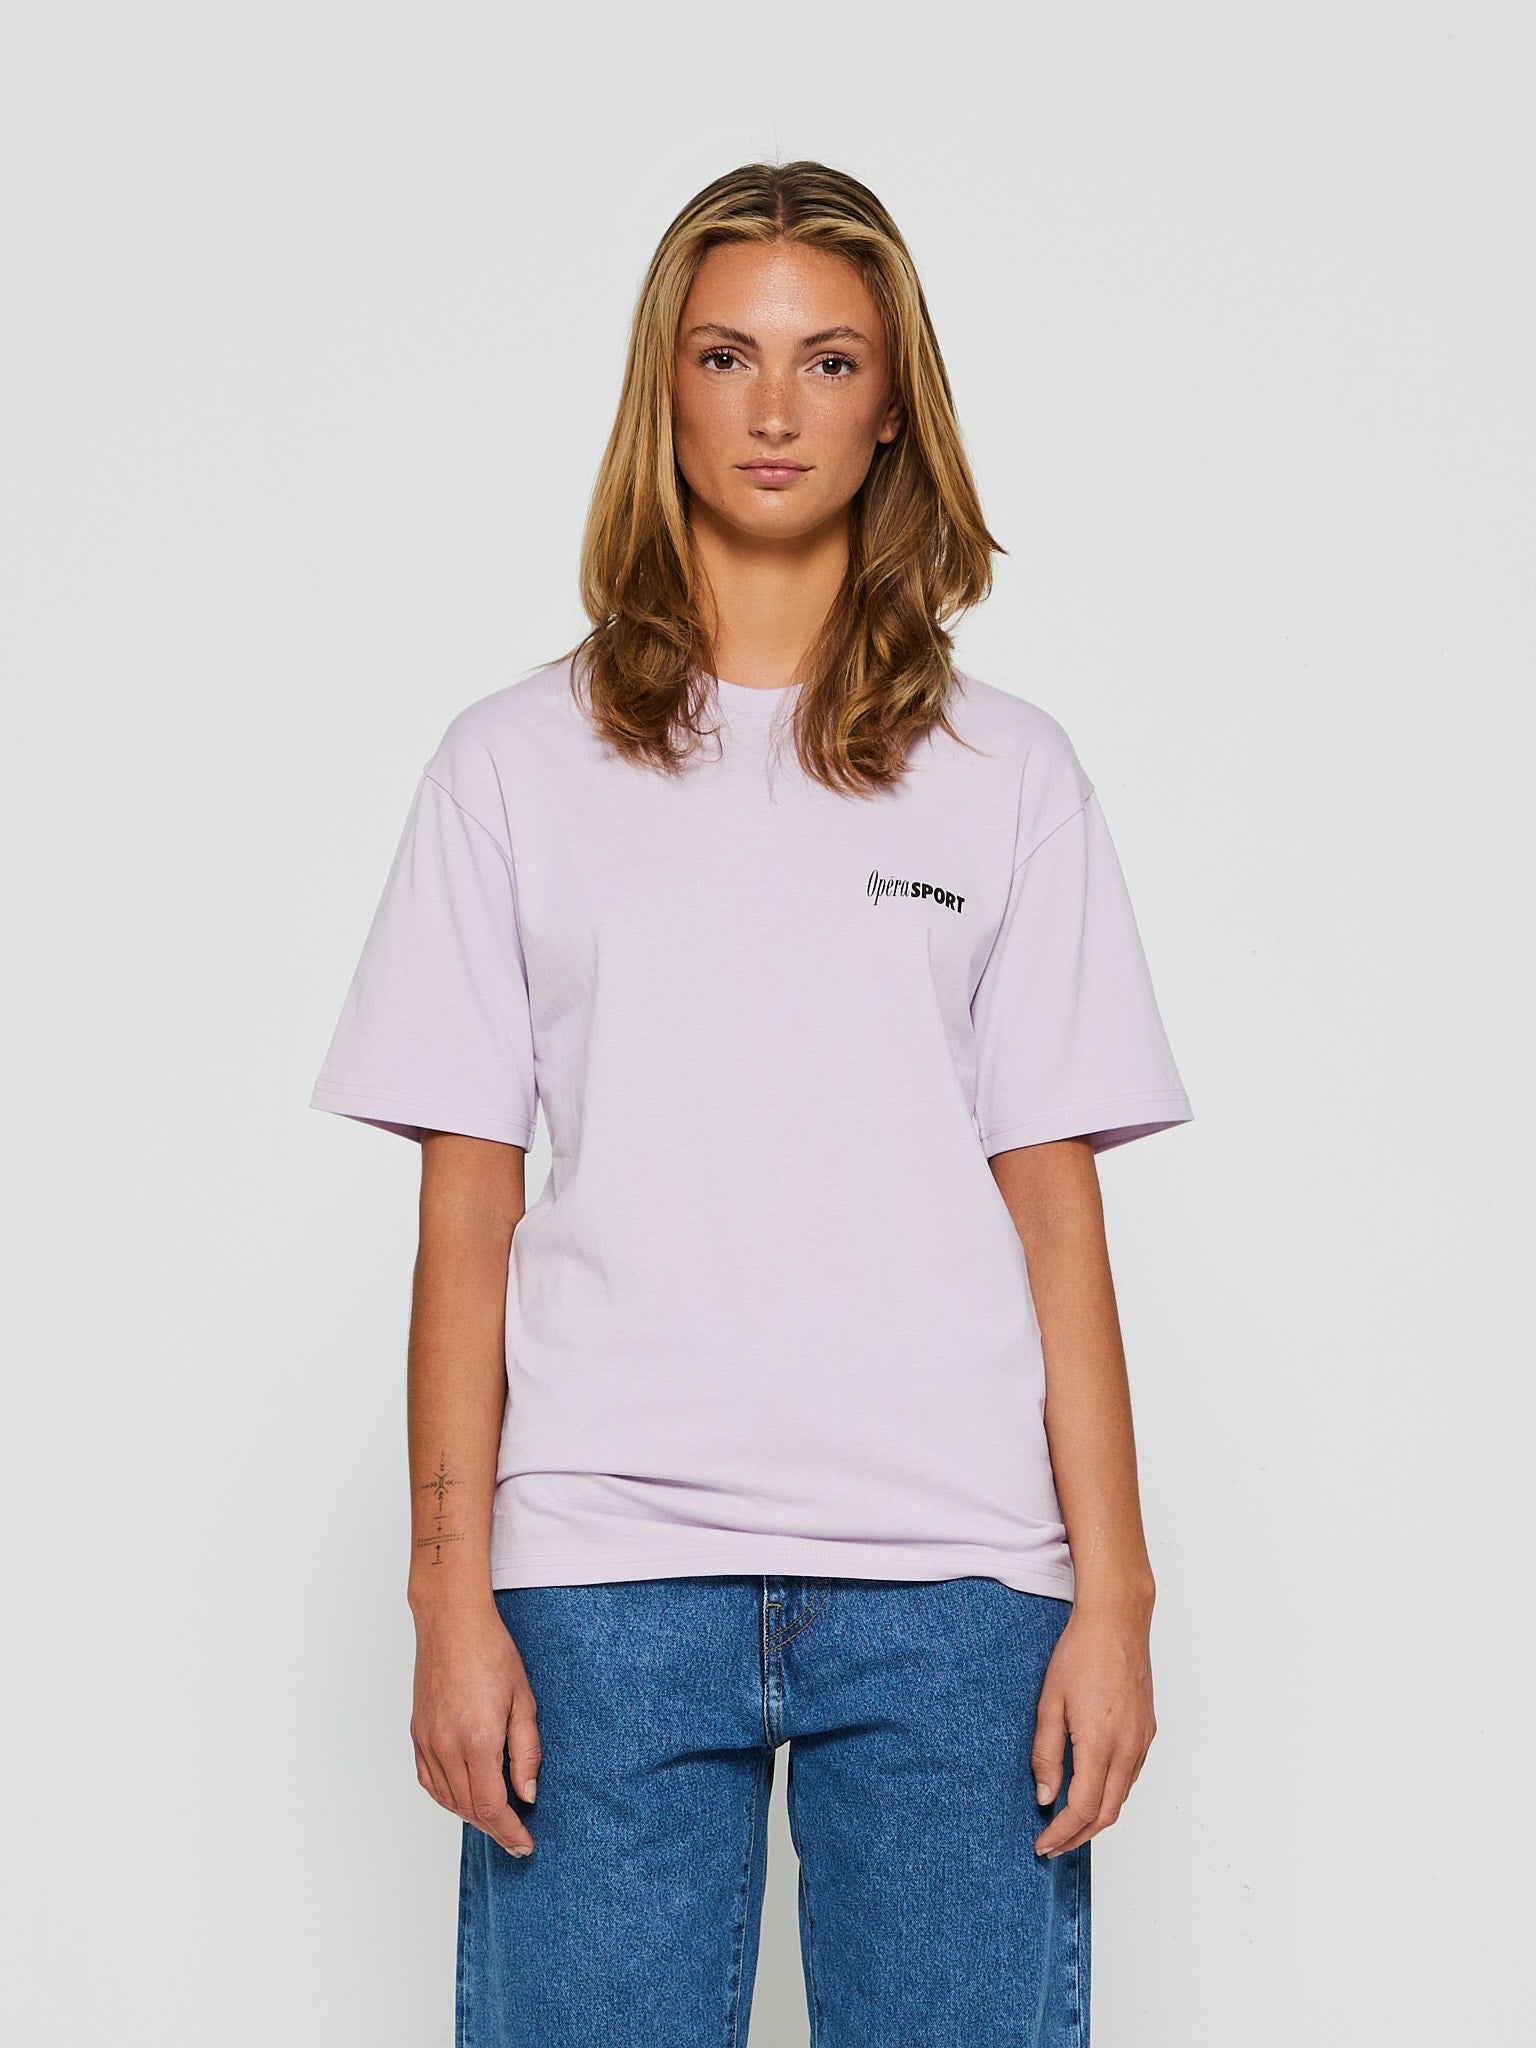 Opera Sport - Claude T-Shirt in Lilac